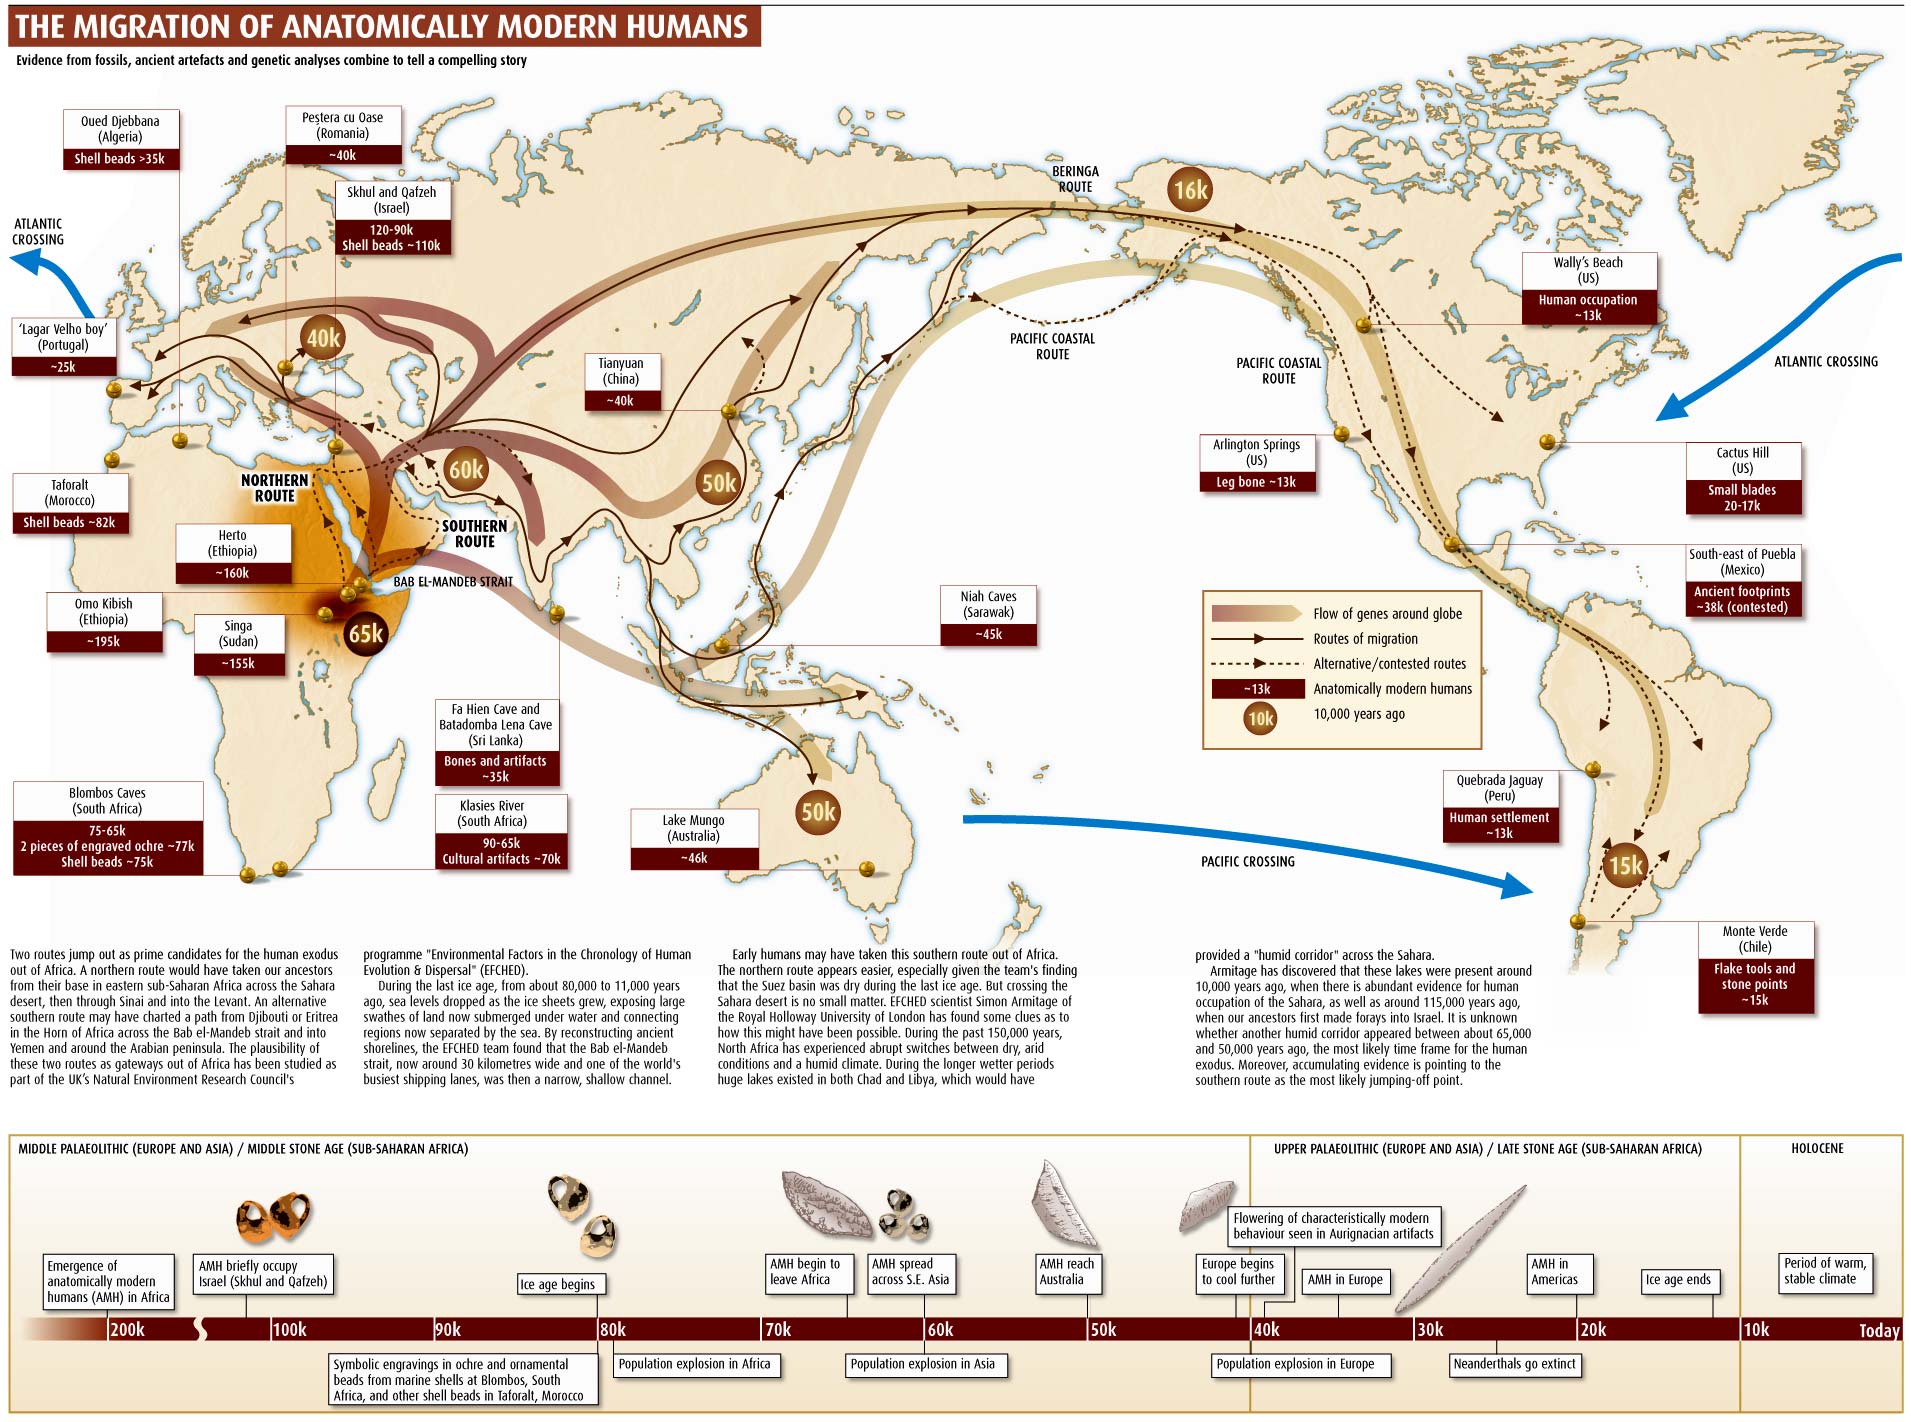 Human descent & migration patterns